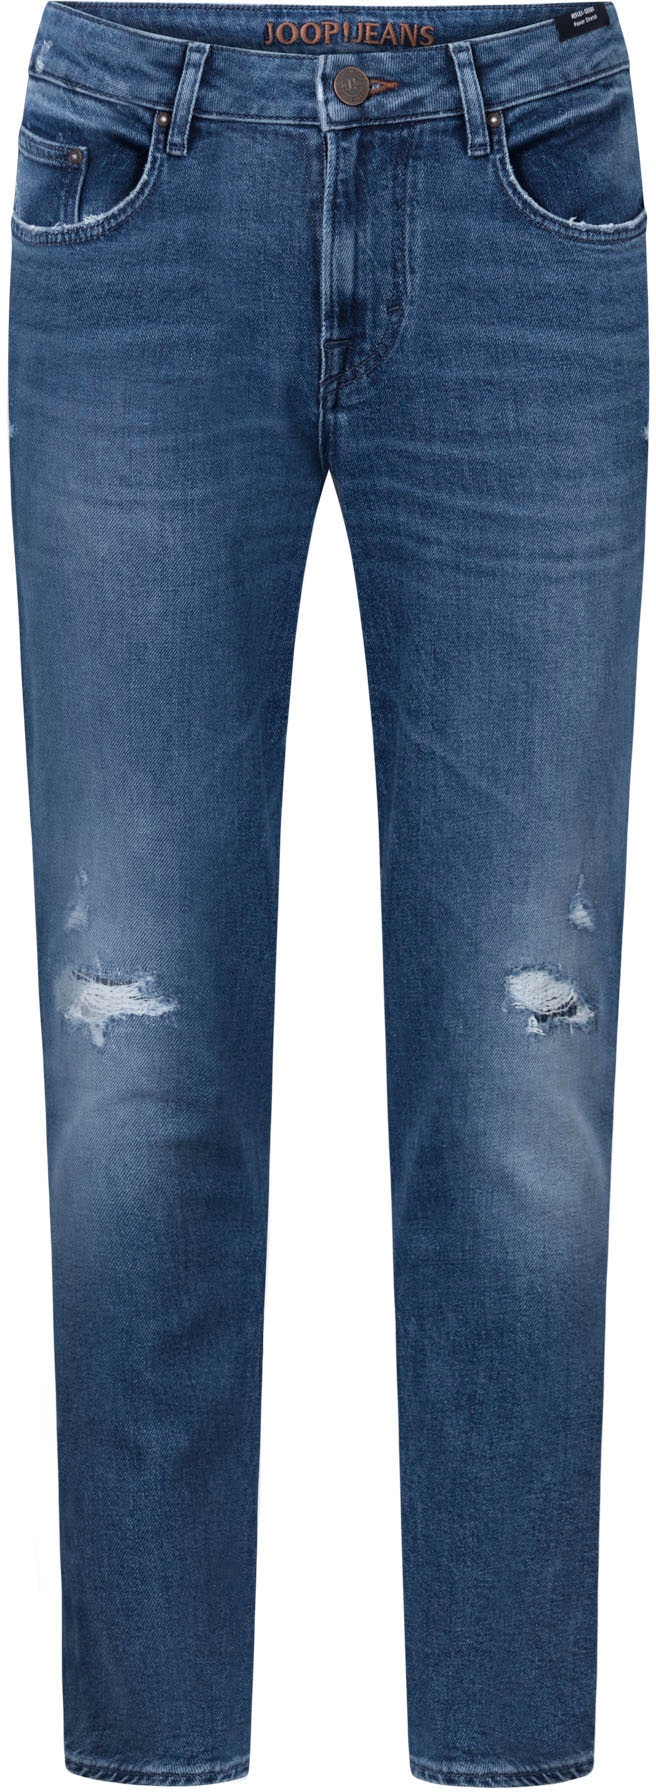 Joop Jeans Straight-Jeans, in sur 5-Pocket Form Trouver